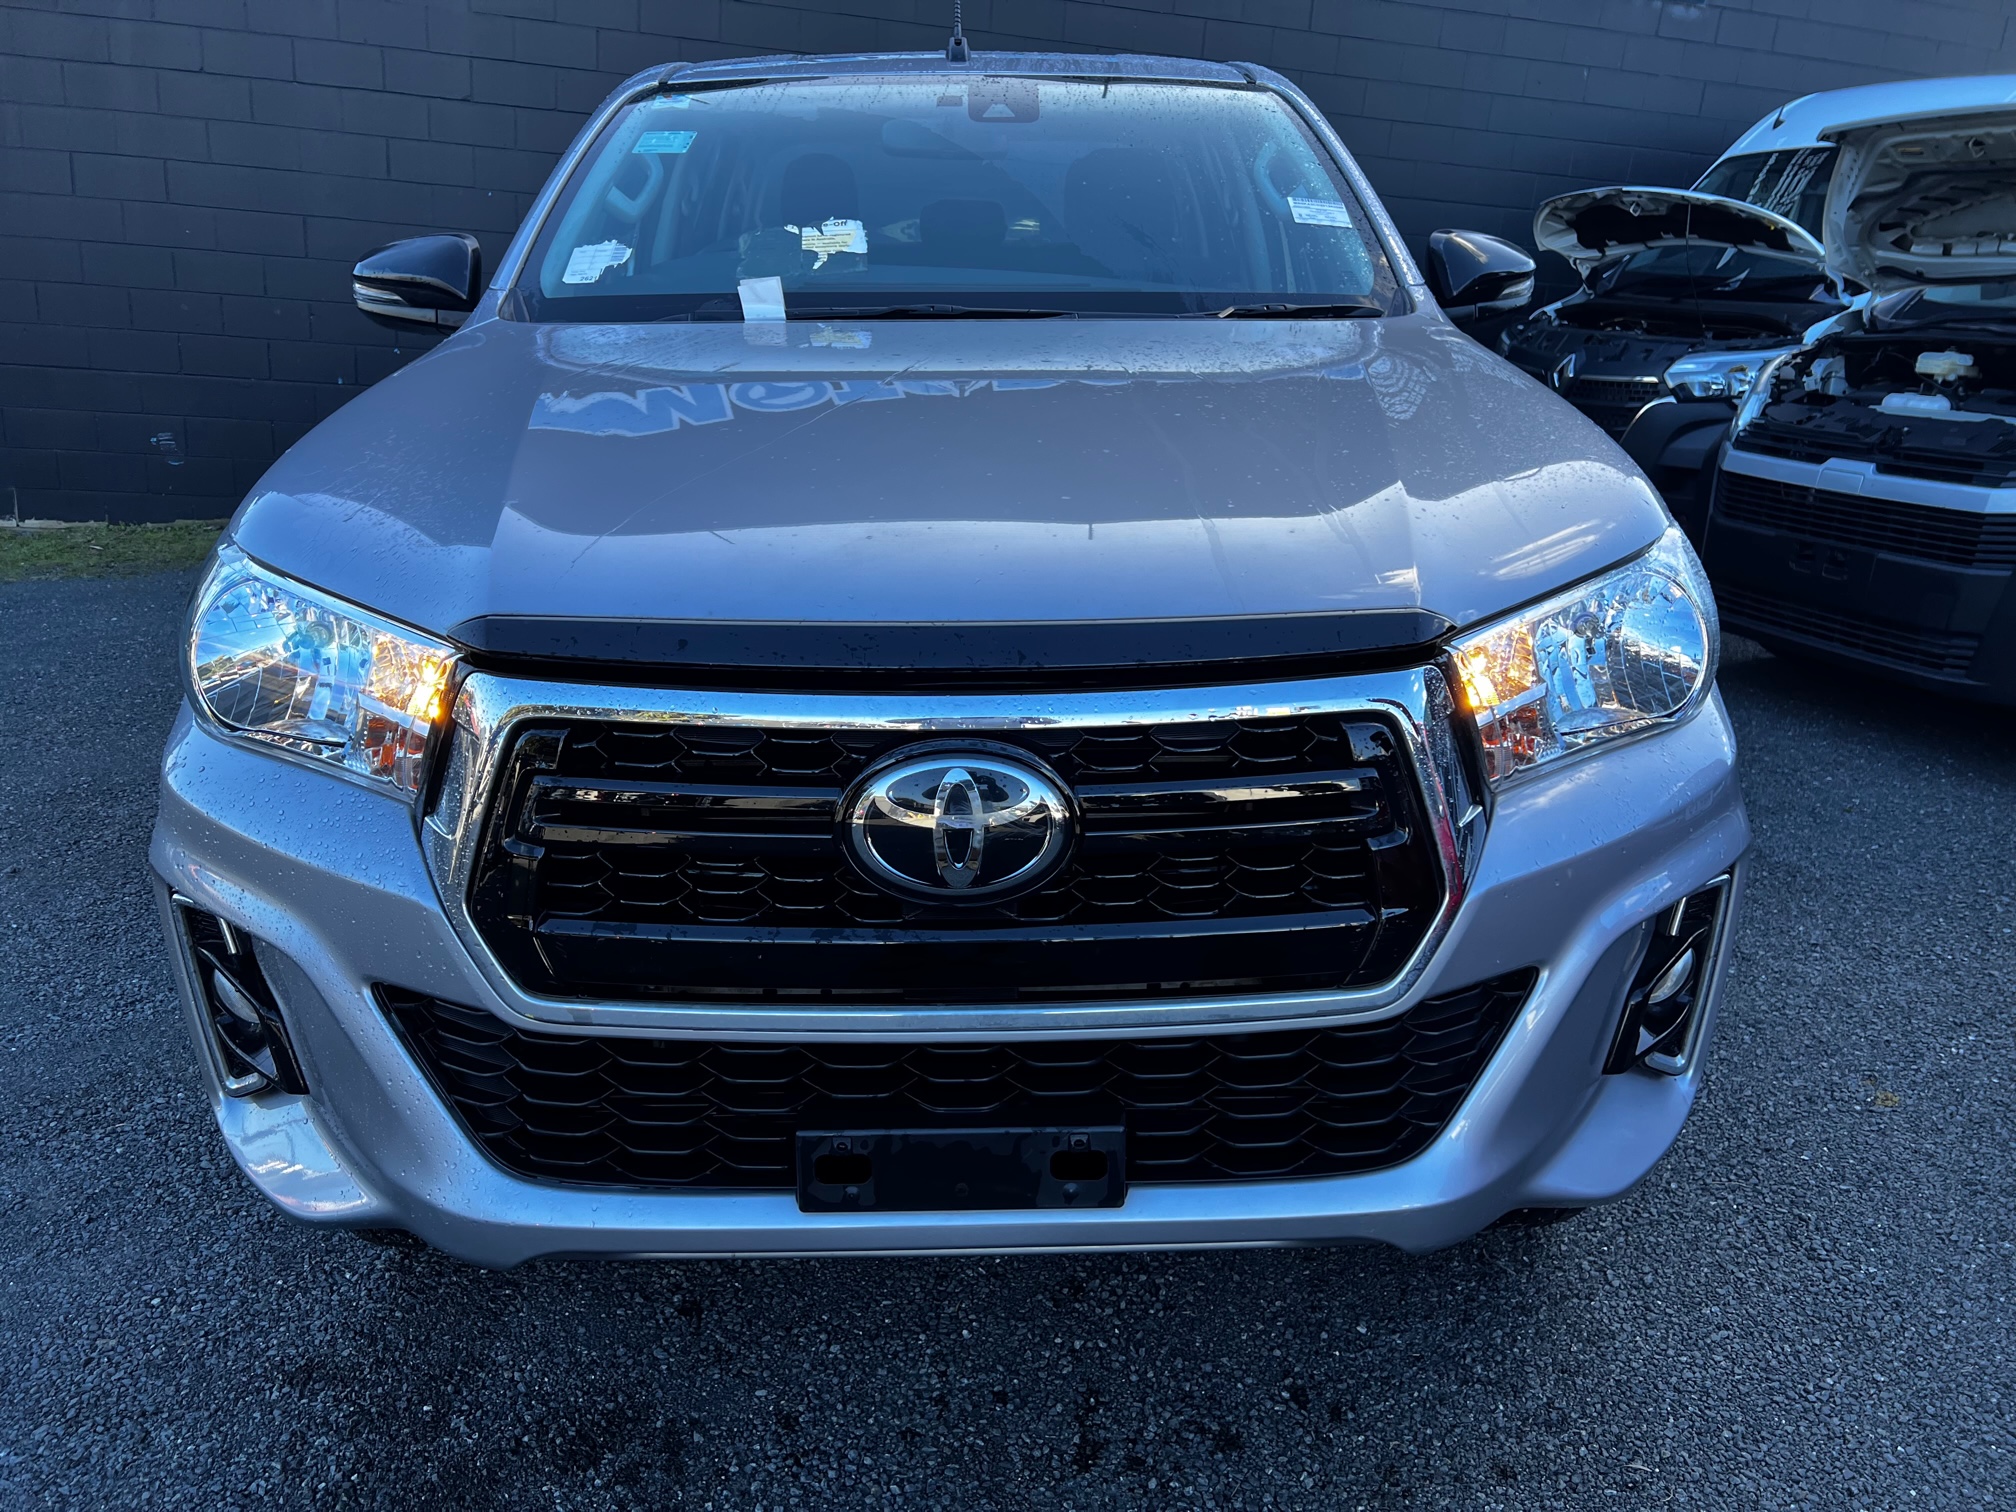 Toyota Hilux SR5 2019 Image 3